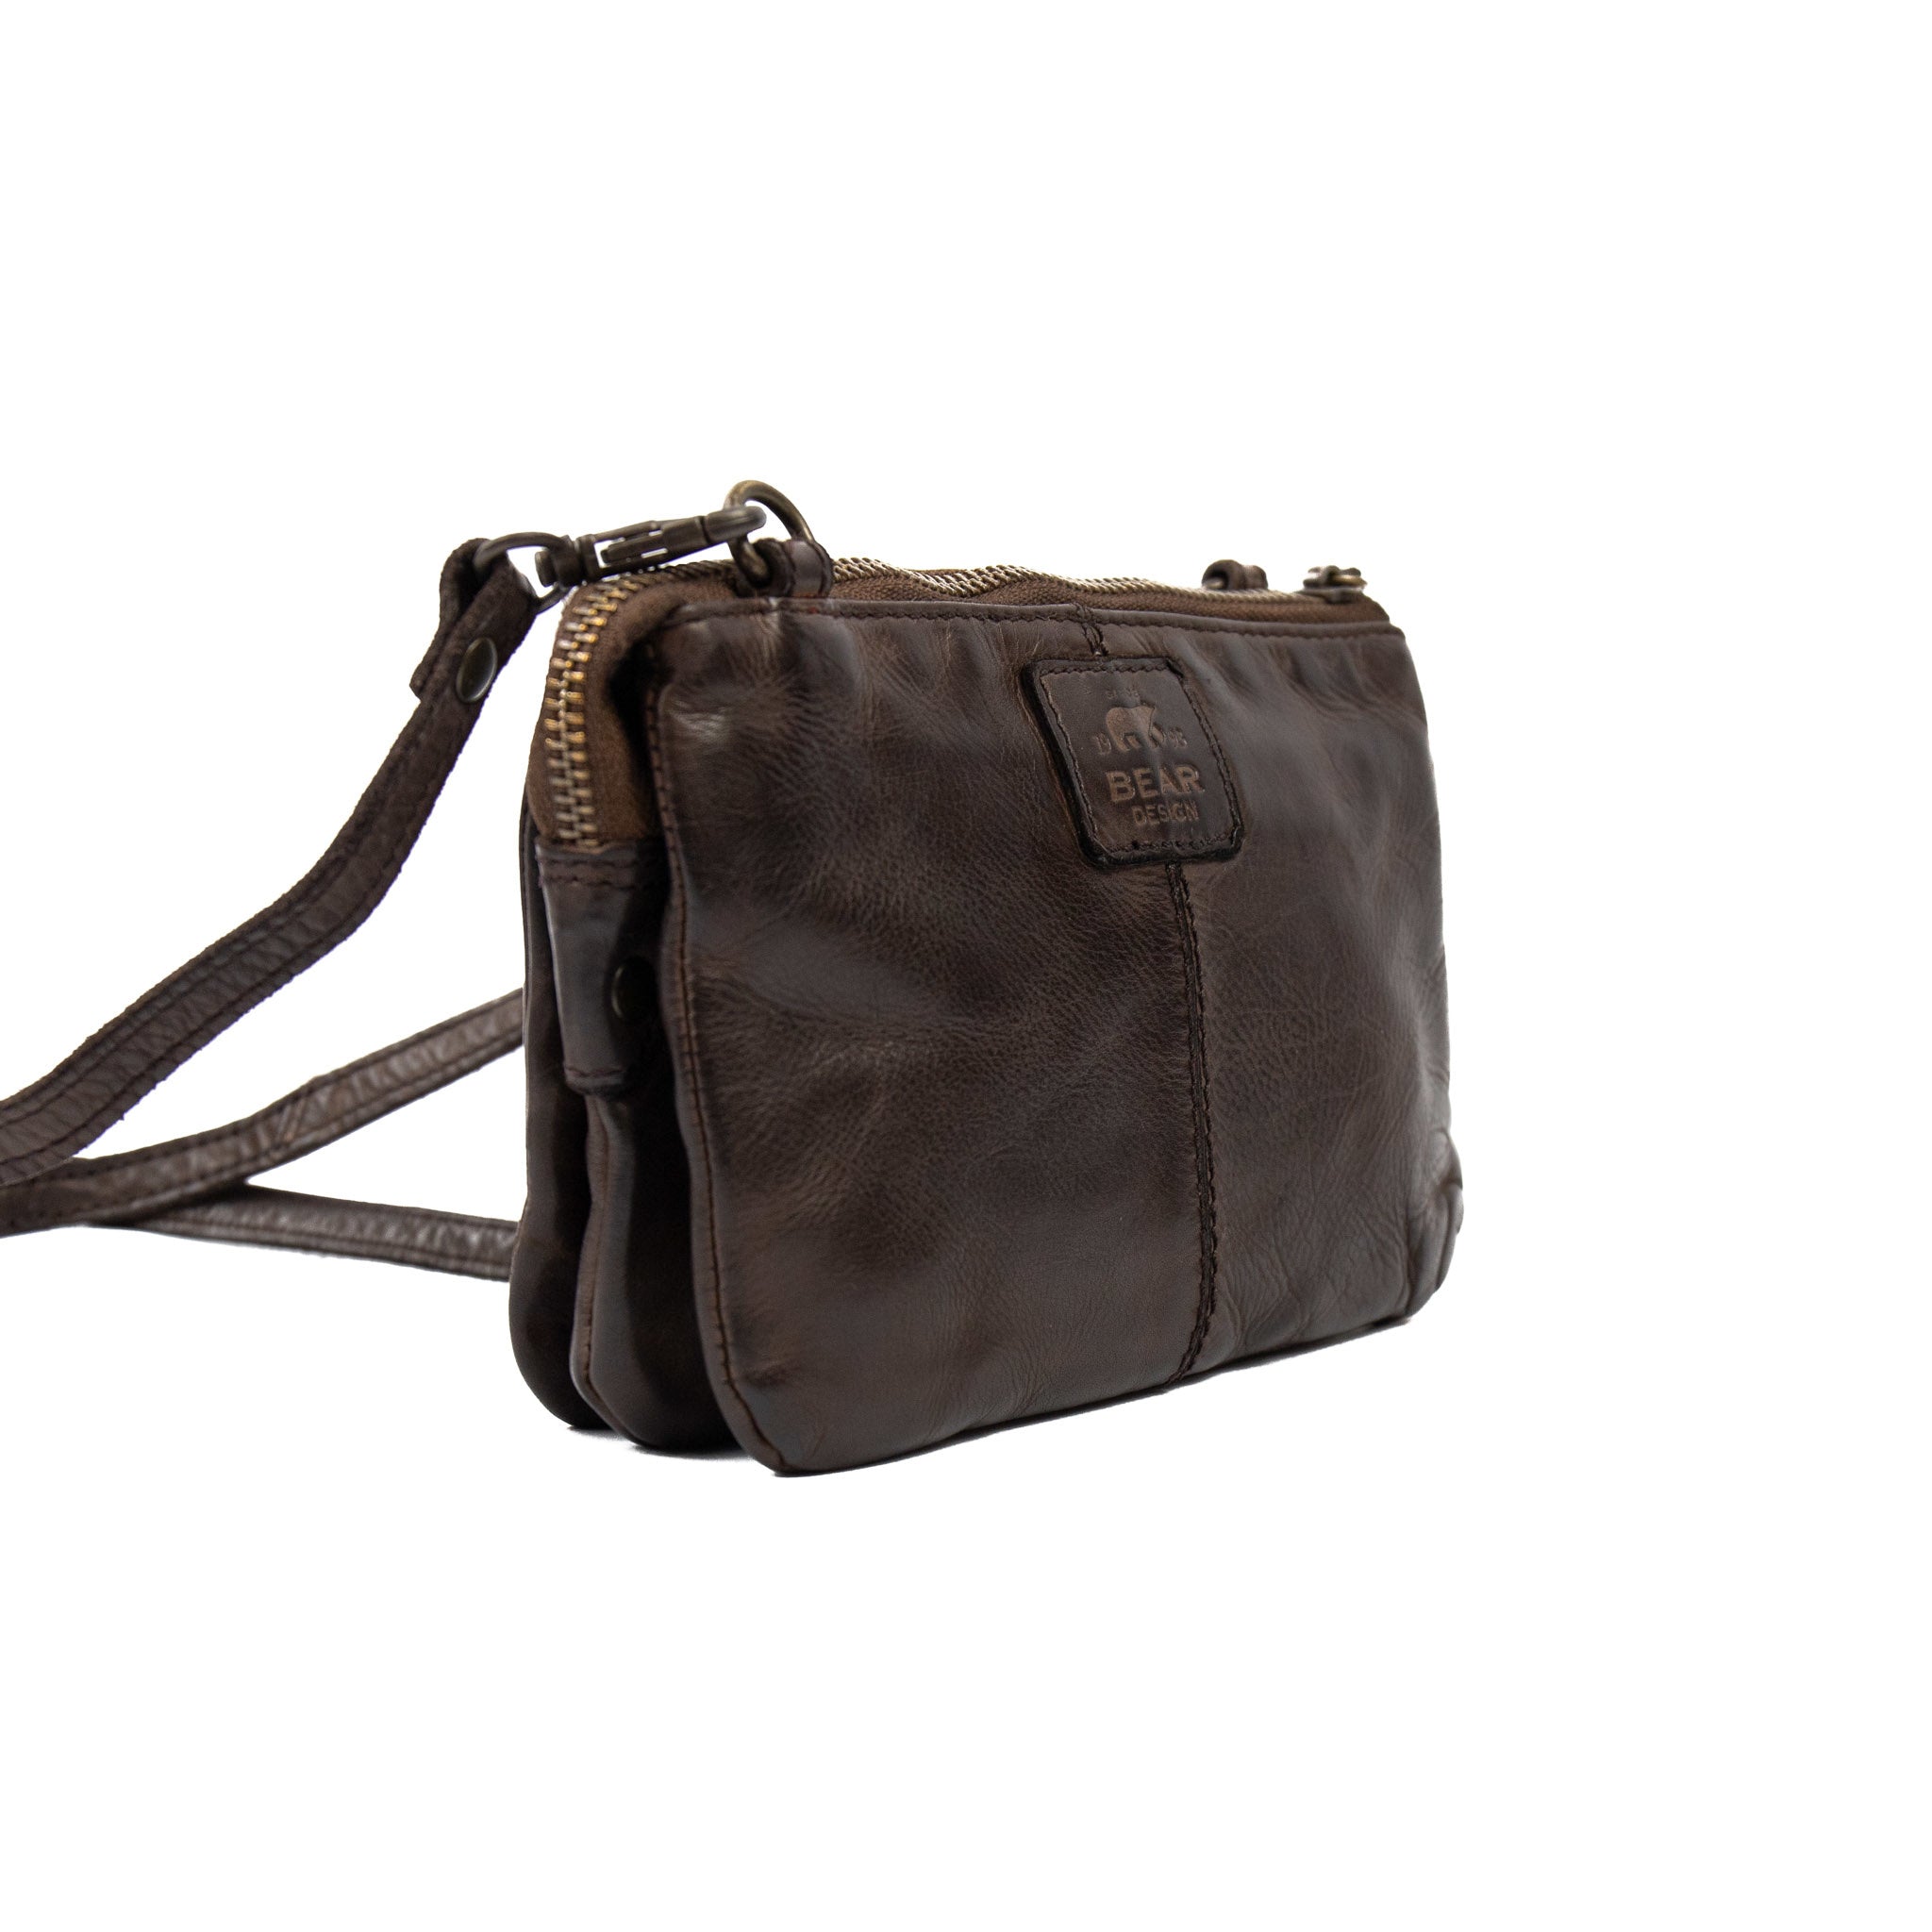 Purse bag 'Umi' dark brown - CL 36799